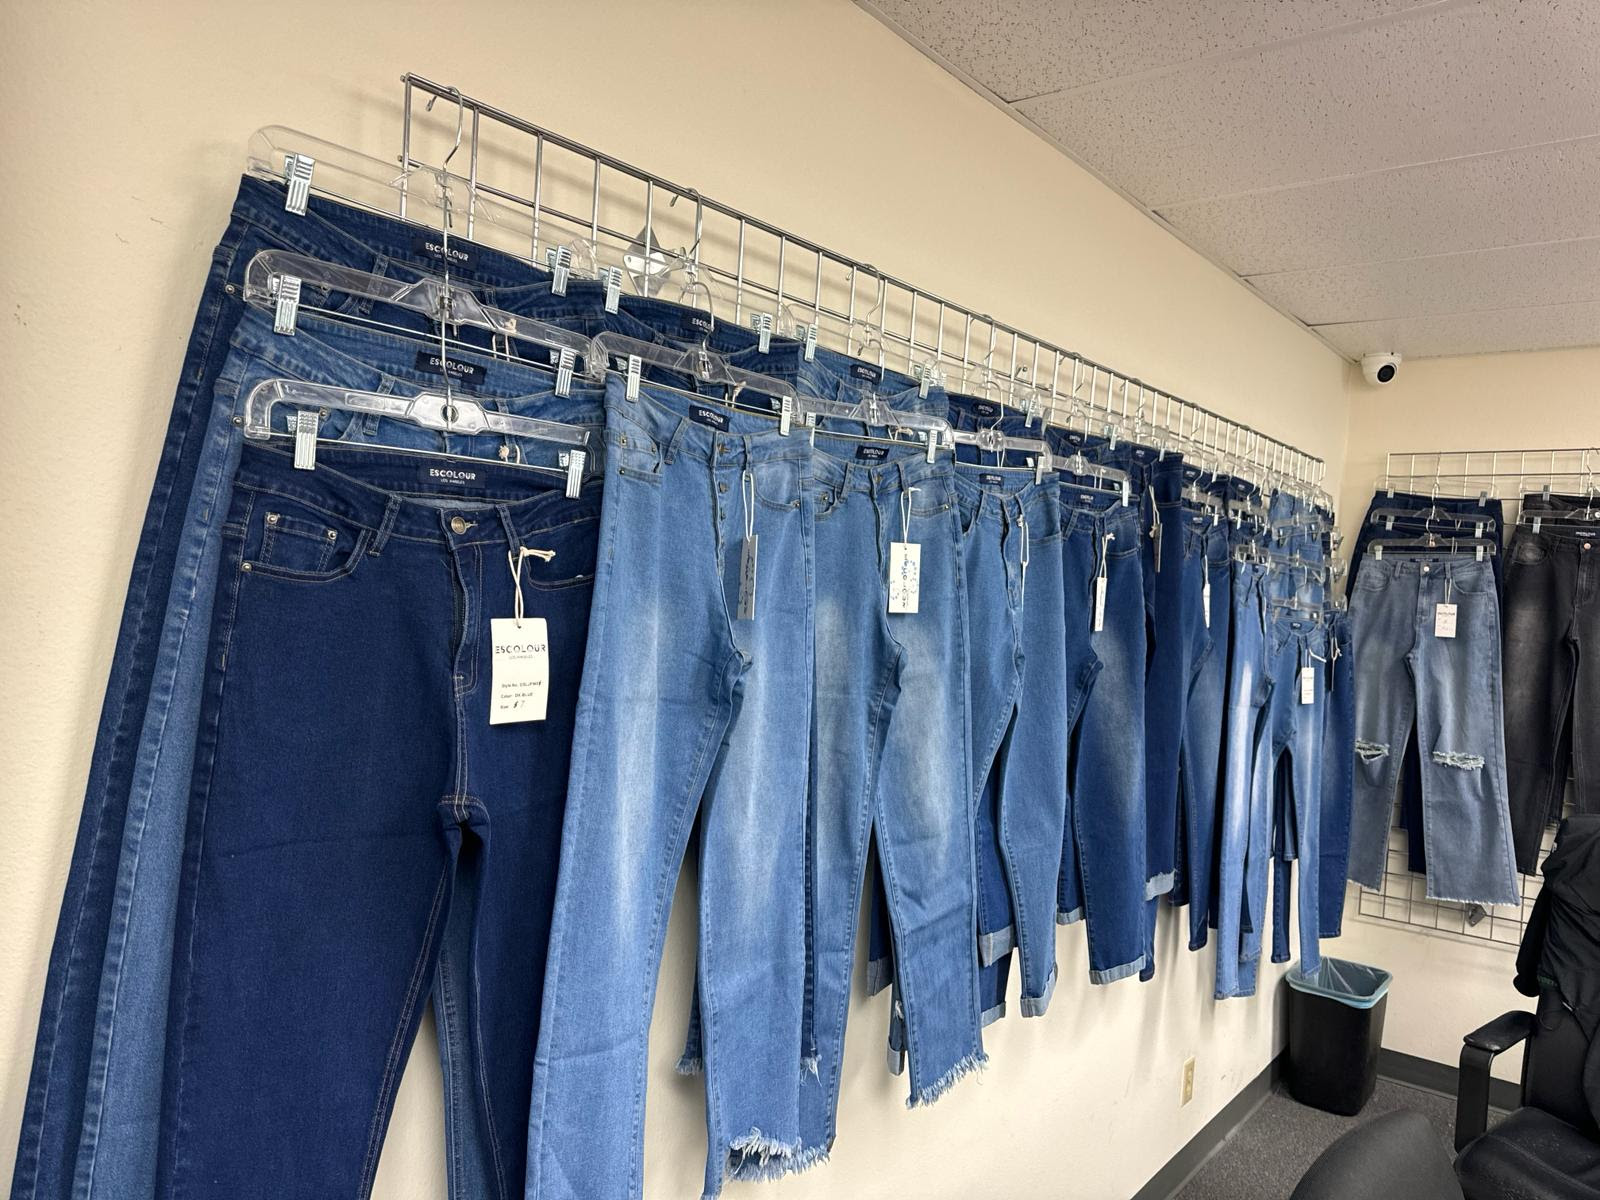 ESCOLOUR Ladys Stretch Fashion Jeans .  13,440 Pairs.  EXW Los Angeles $3.99 Pair.